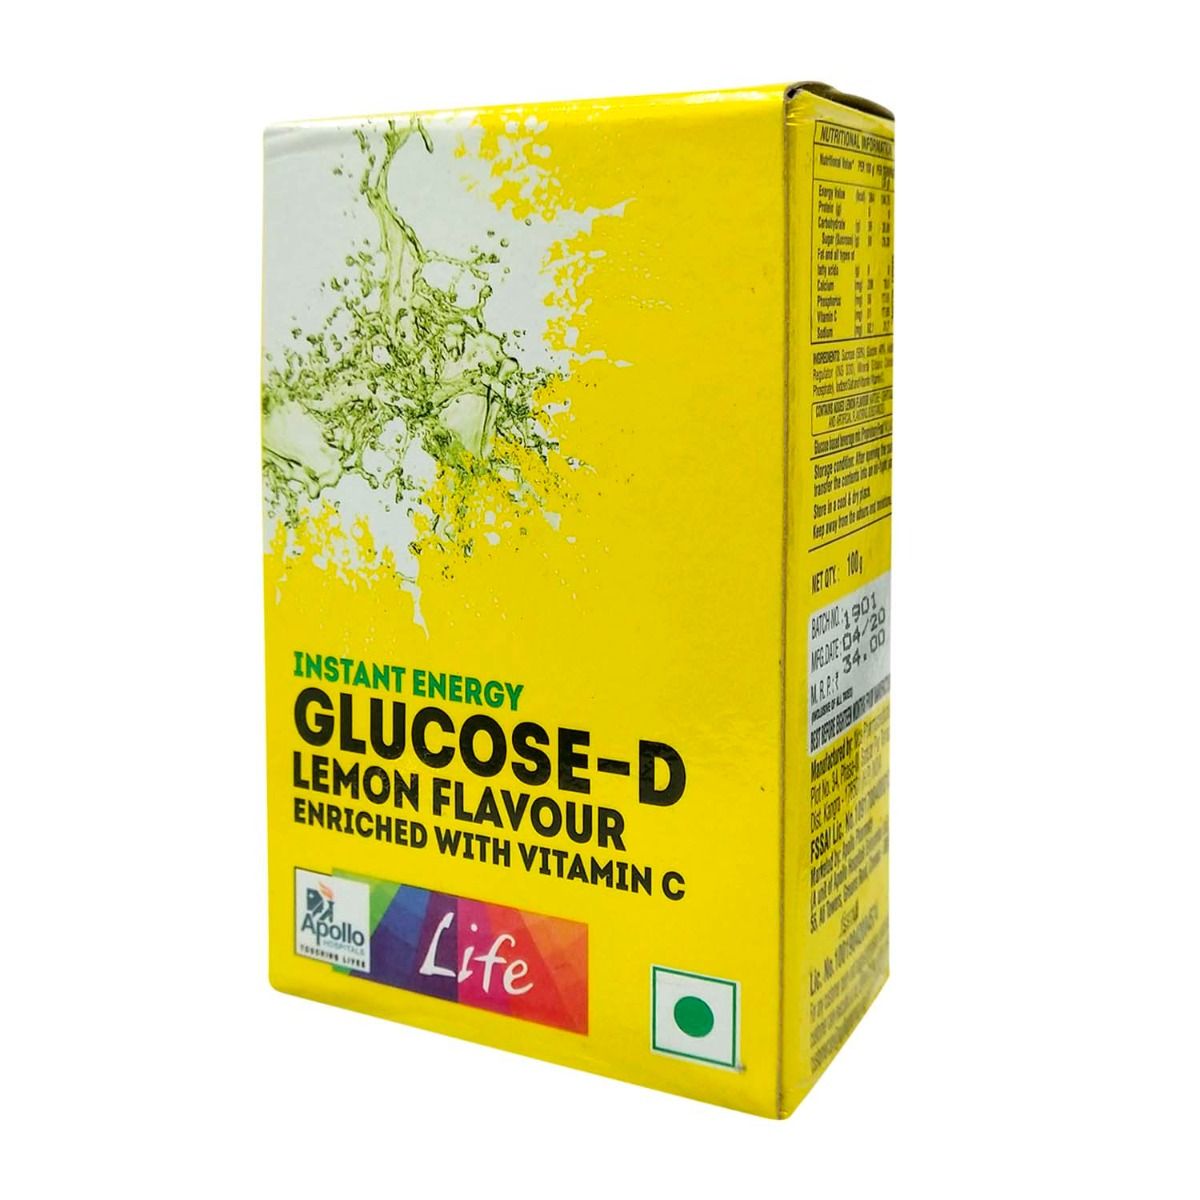 Buy Apollo Life Glucose-D Lemon Flavour Instant Energy Drink, 100 gm Refill Pack Online